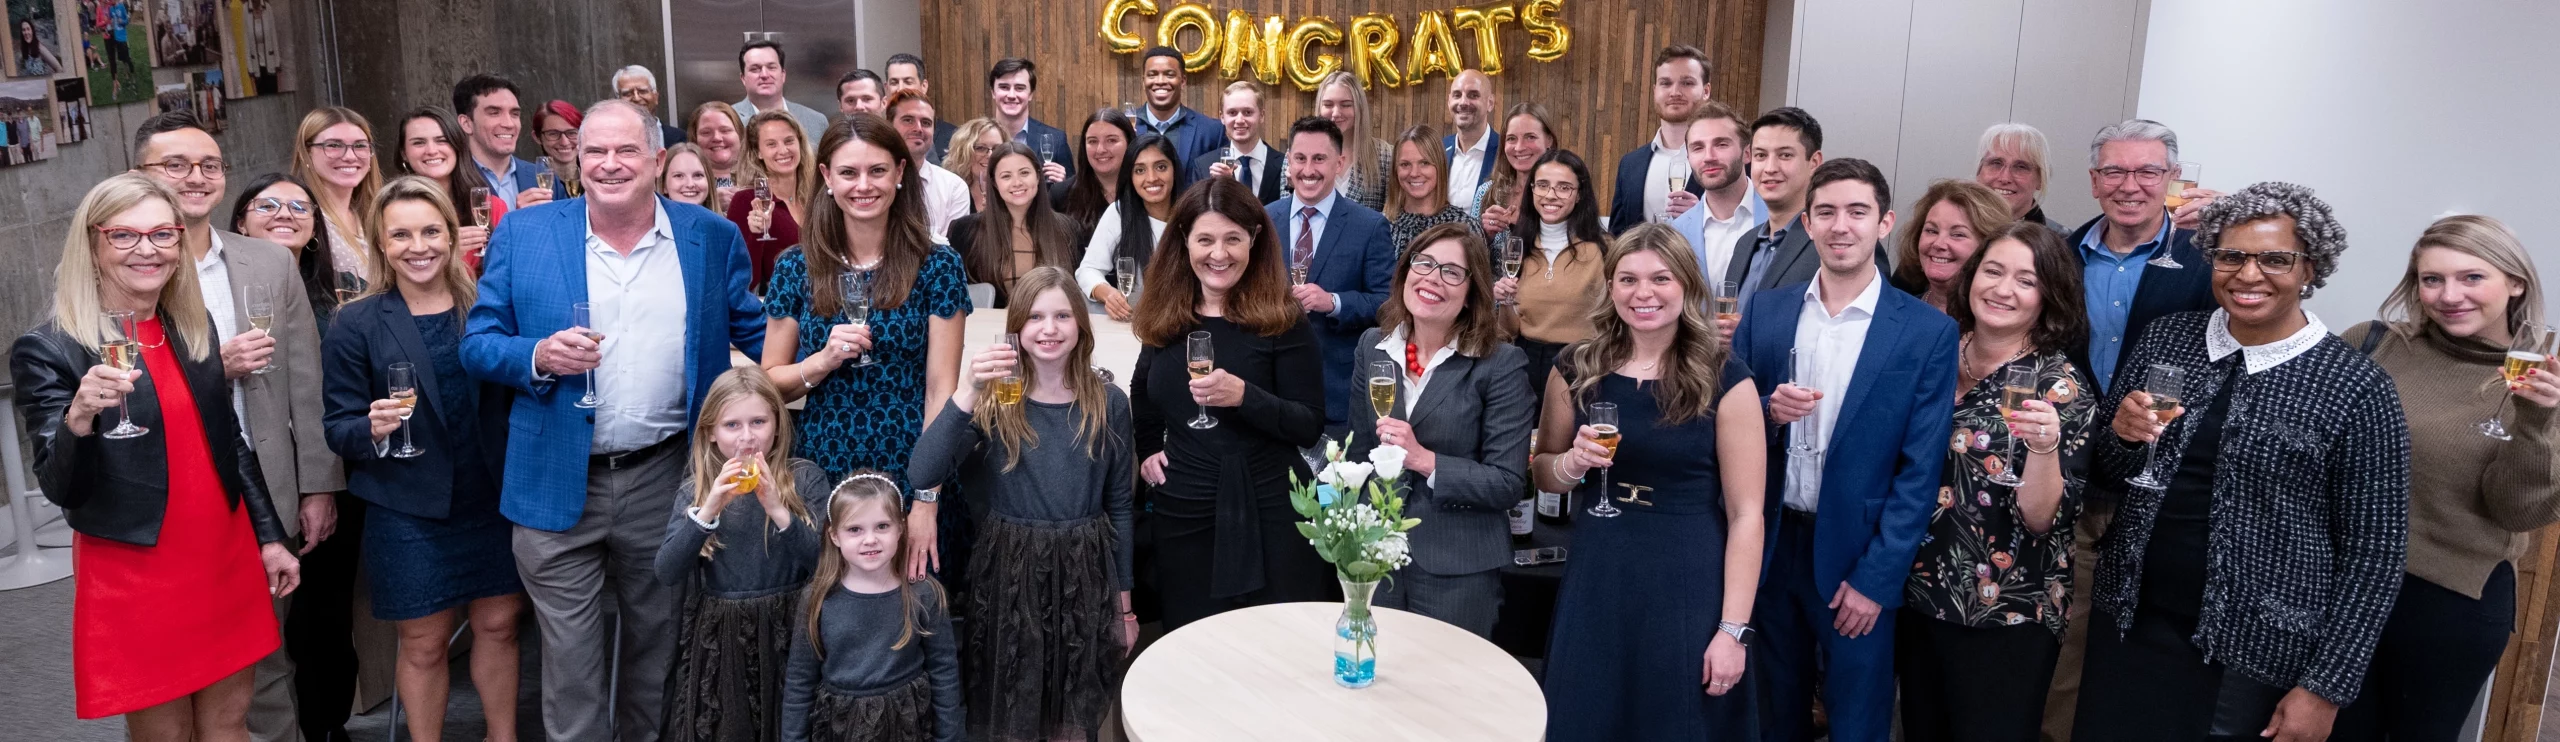 Founder & CEO, Rebecca Corbin toasting Corbin's 15 Year Anniversary with the Corbin Team, family and friends at the Farmington, CT Headquarters